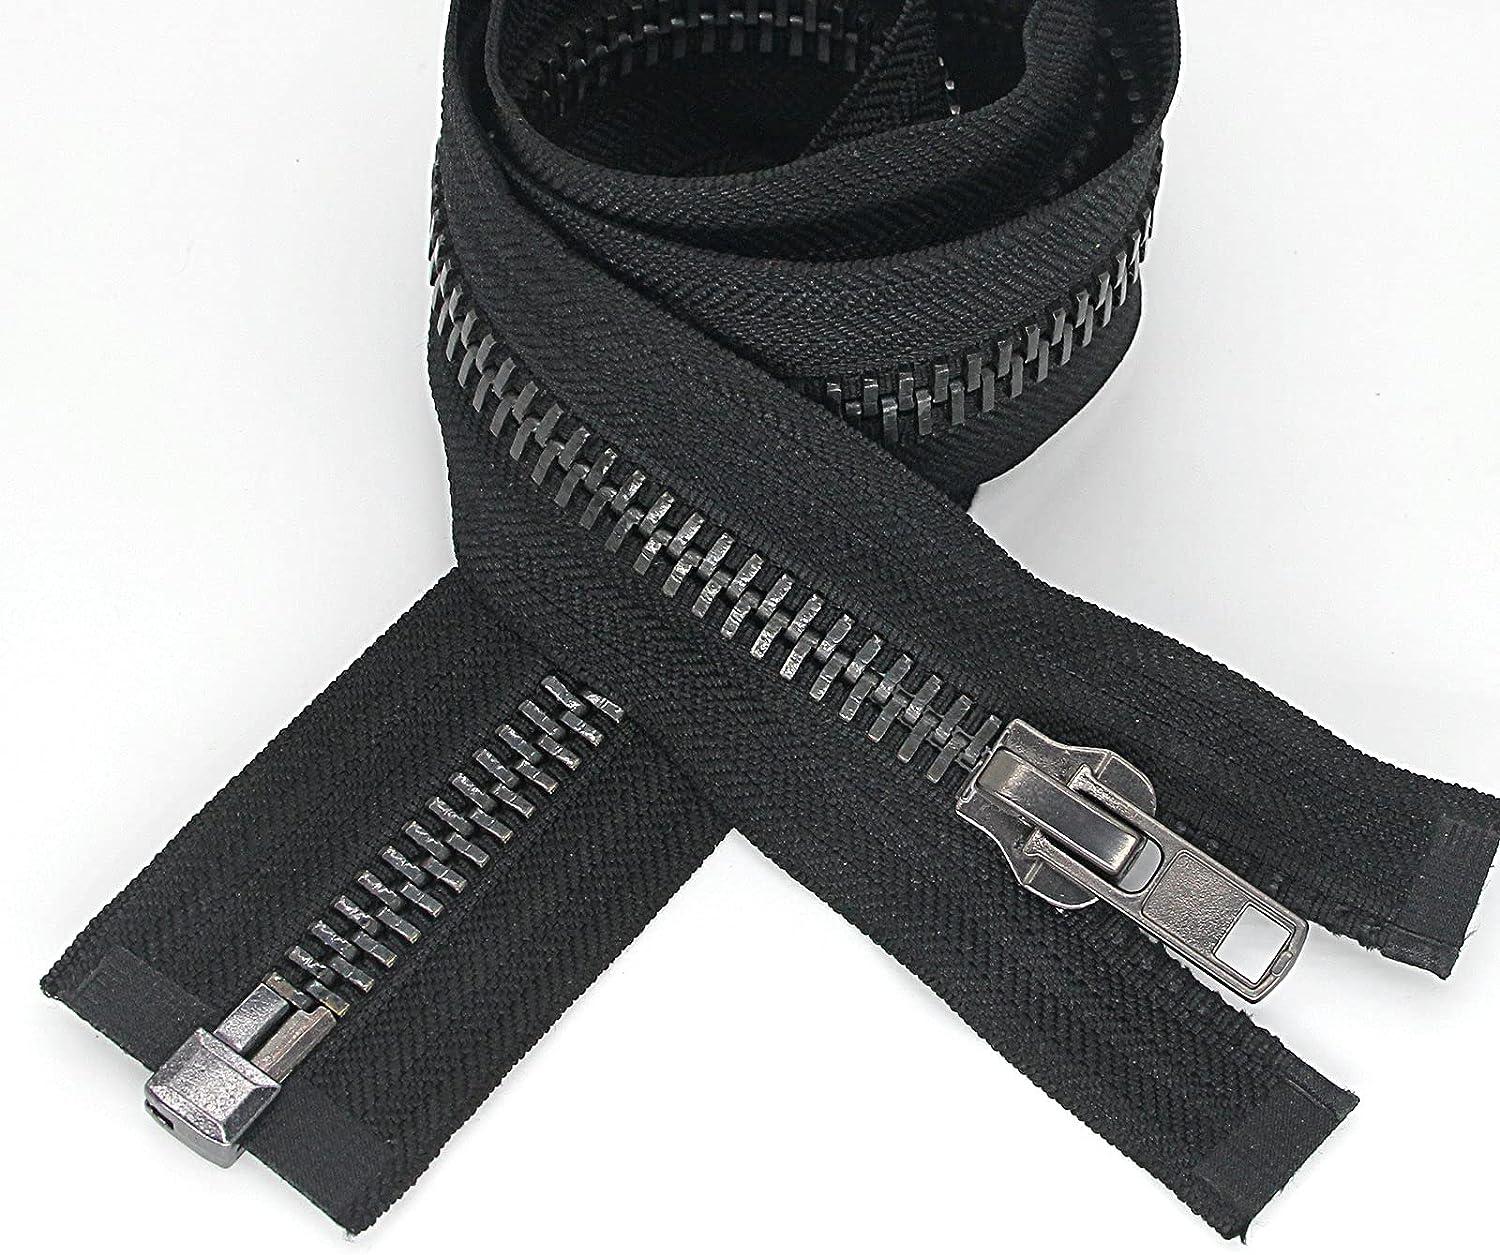 #10 22 inch Metal Jacket Zippers Black Nickel Separating Zipper,Heavy Duty Zippers Replacement Zipper for Sewing Crafts Jackets Coats Vest Bags